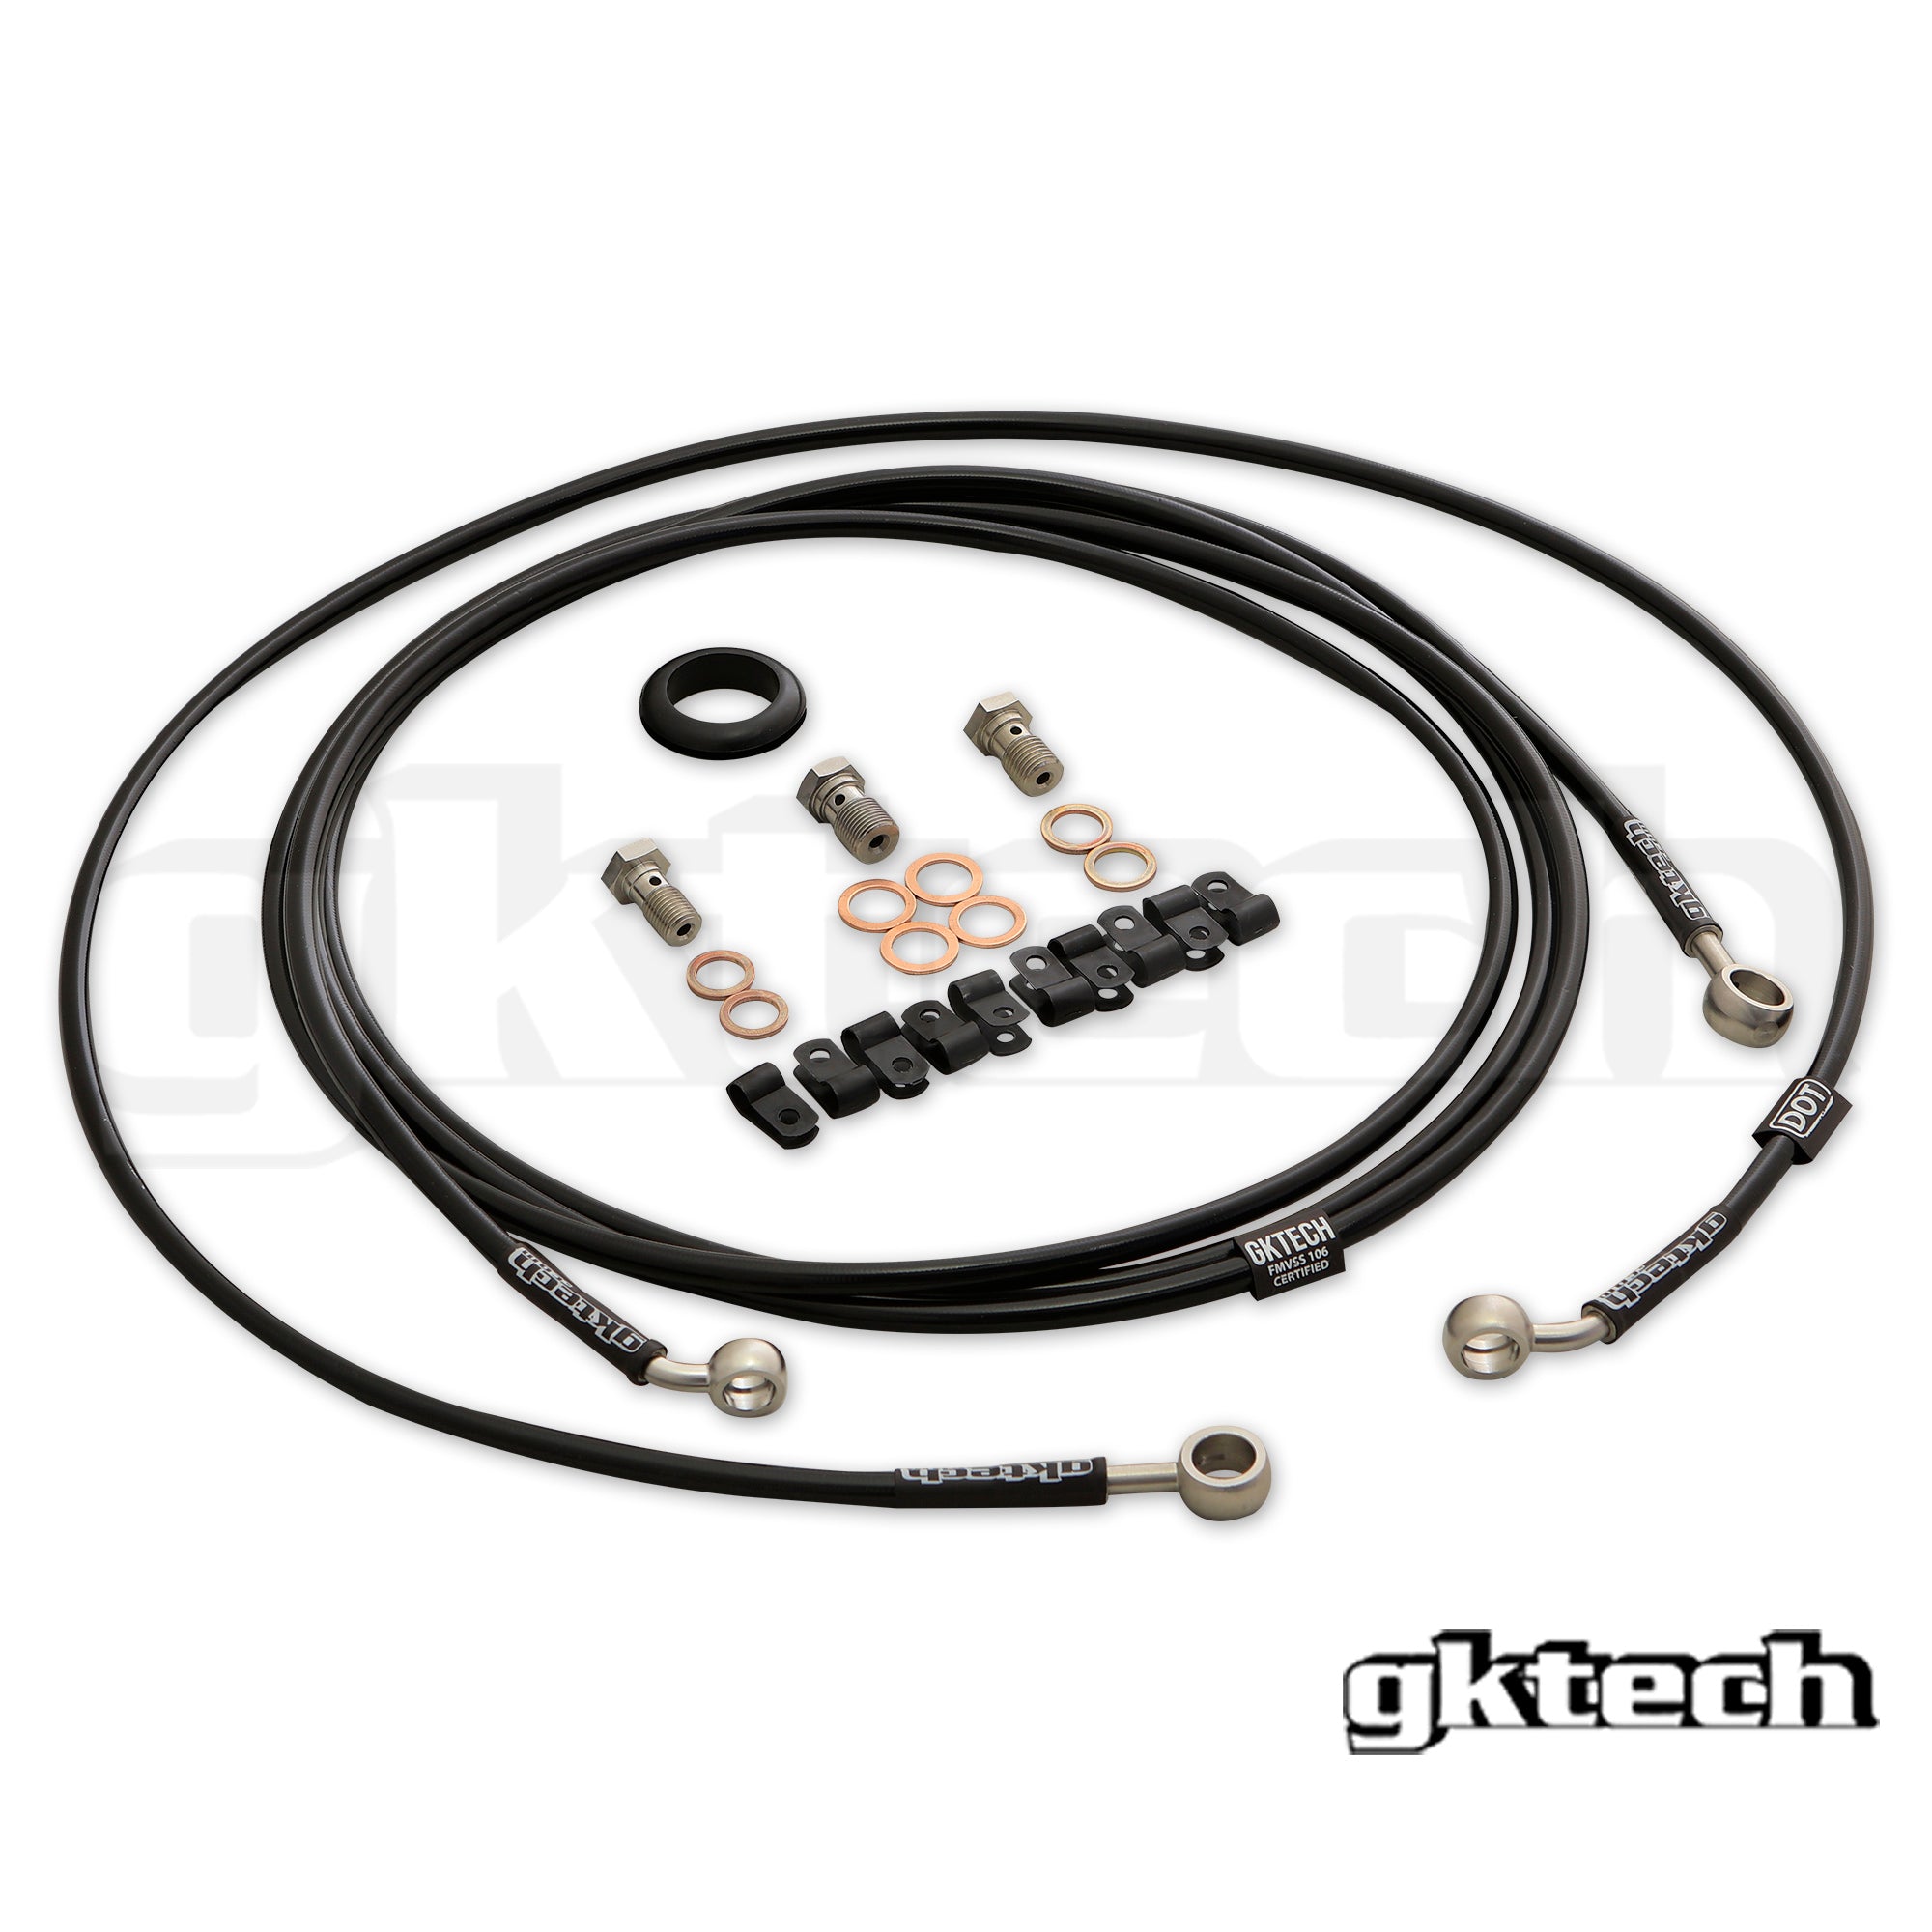 FR-S / GR86 / BRZ In-line hydraulic e-brake line kit